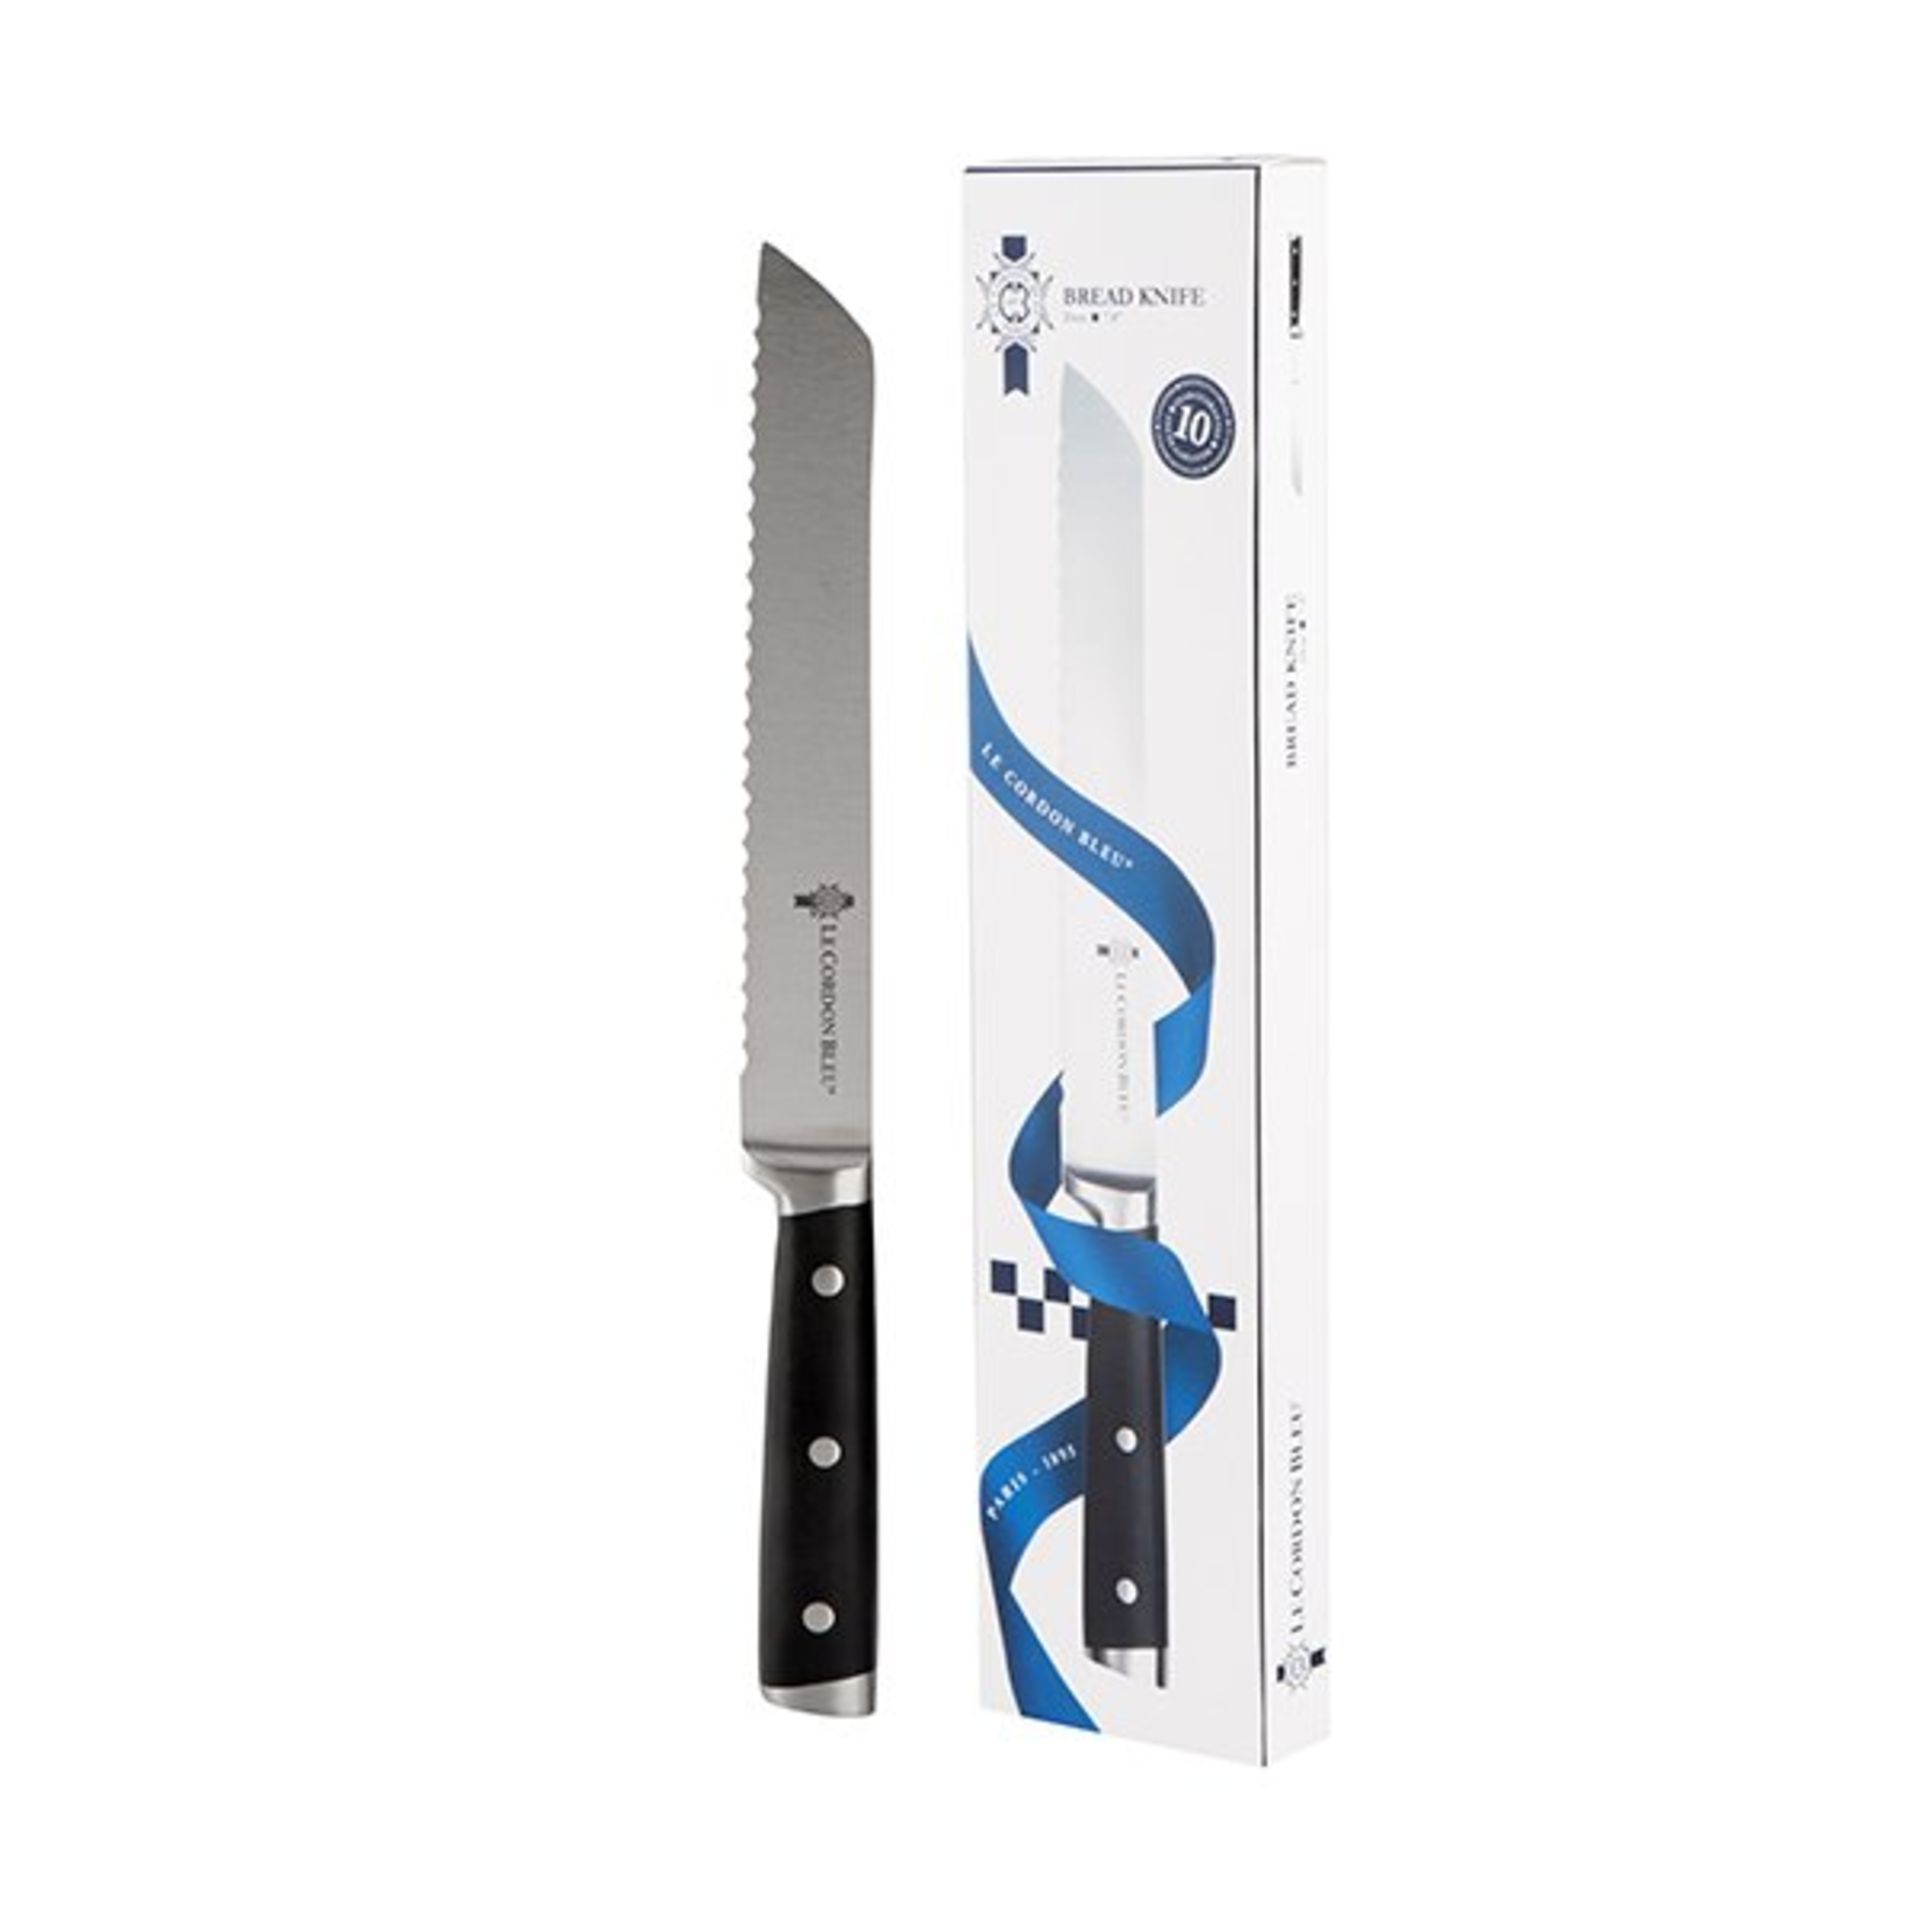 BRAND NEW LE CORDON BLEU STAINLESS STEEL BREAD KNIFE, 200 MM, BLACK - RRP £15.